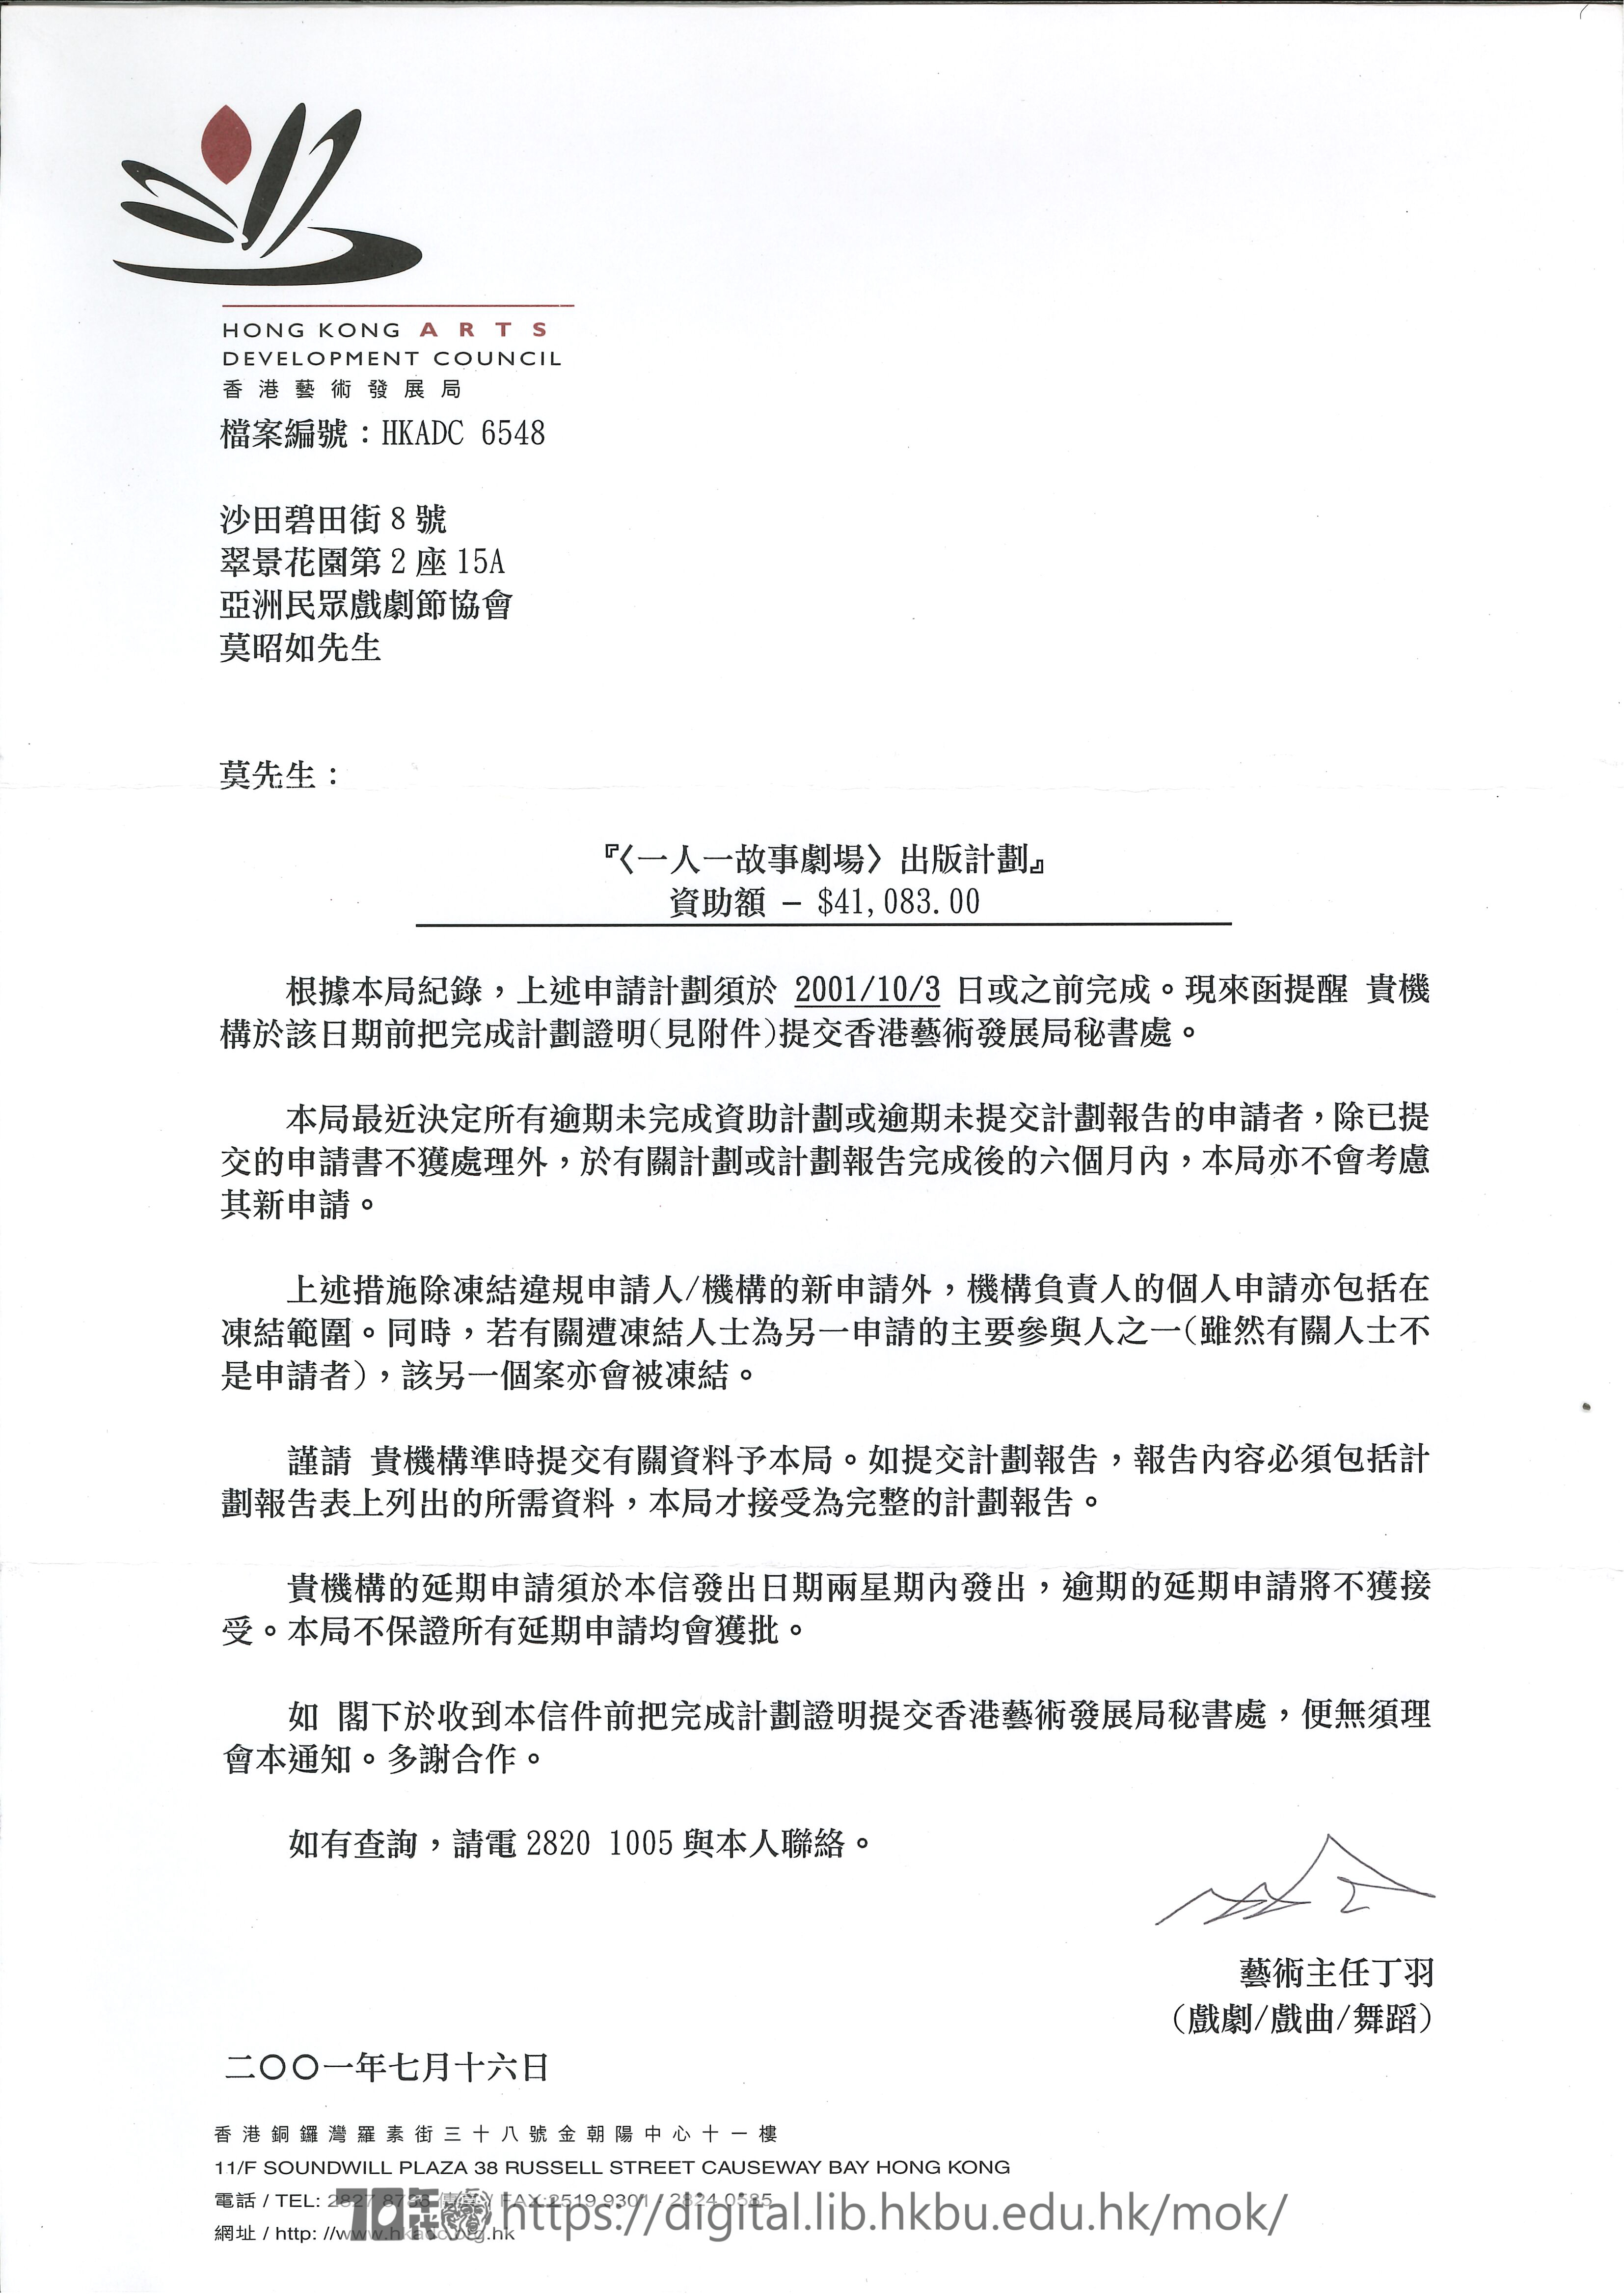 Community theatre  香港藝術發展局計劃時間提醒函  